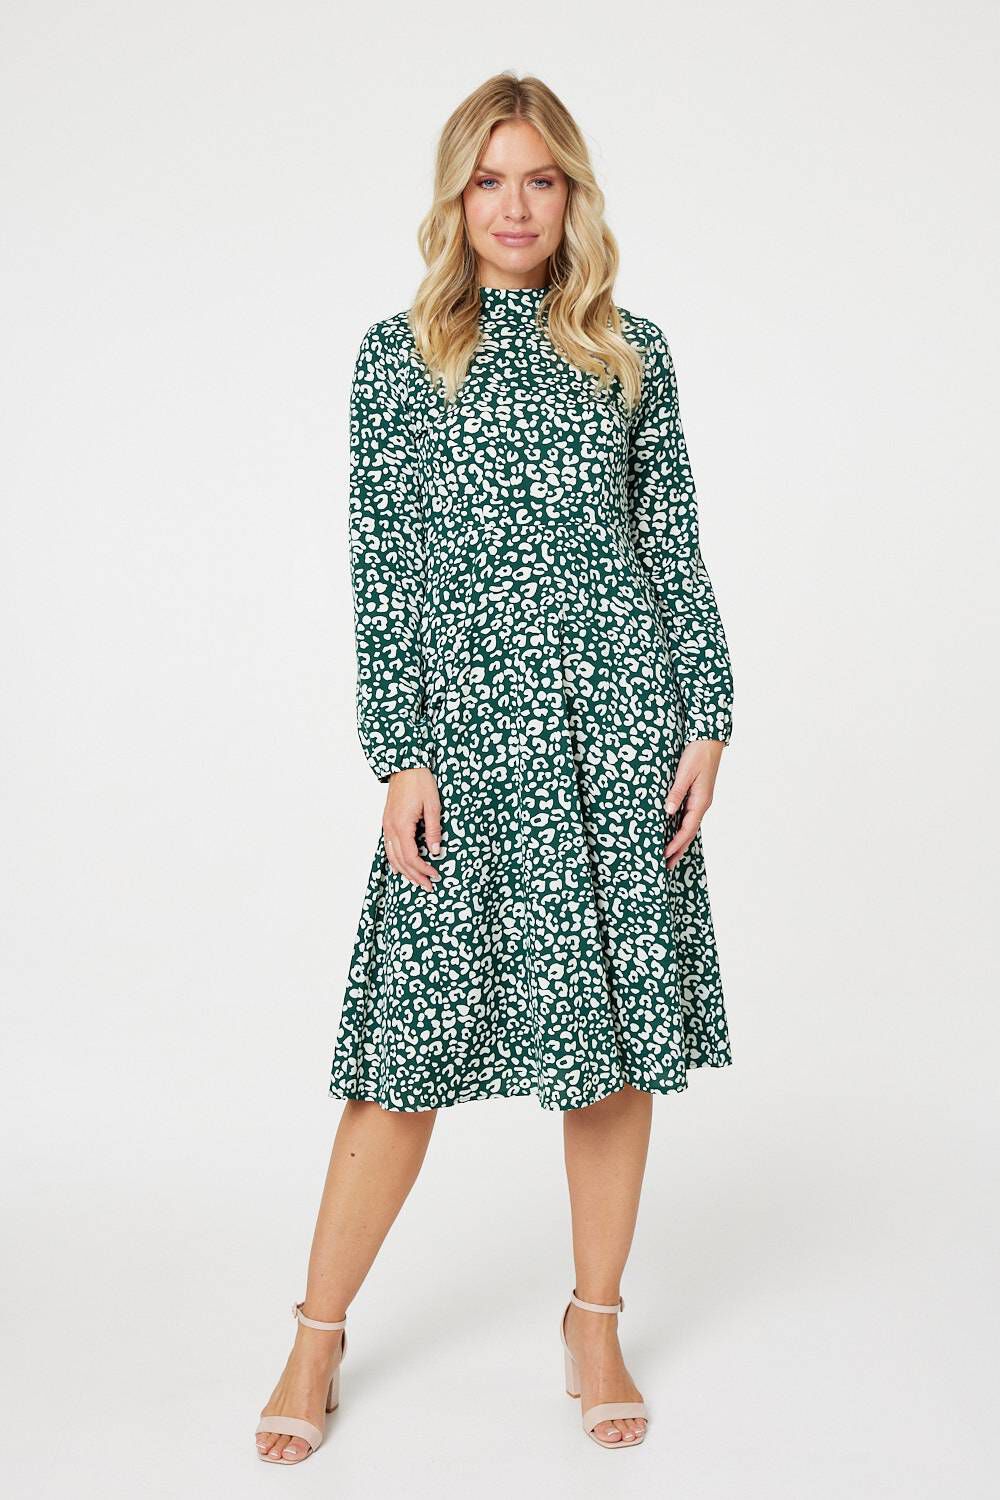 Izabel London Women’s Green Leopard Print Stylish High Neck Tea Dress, Size: 14